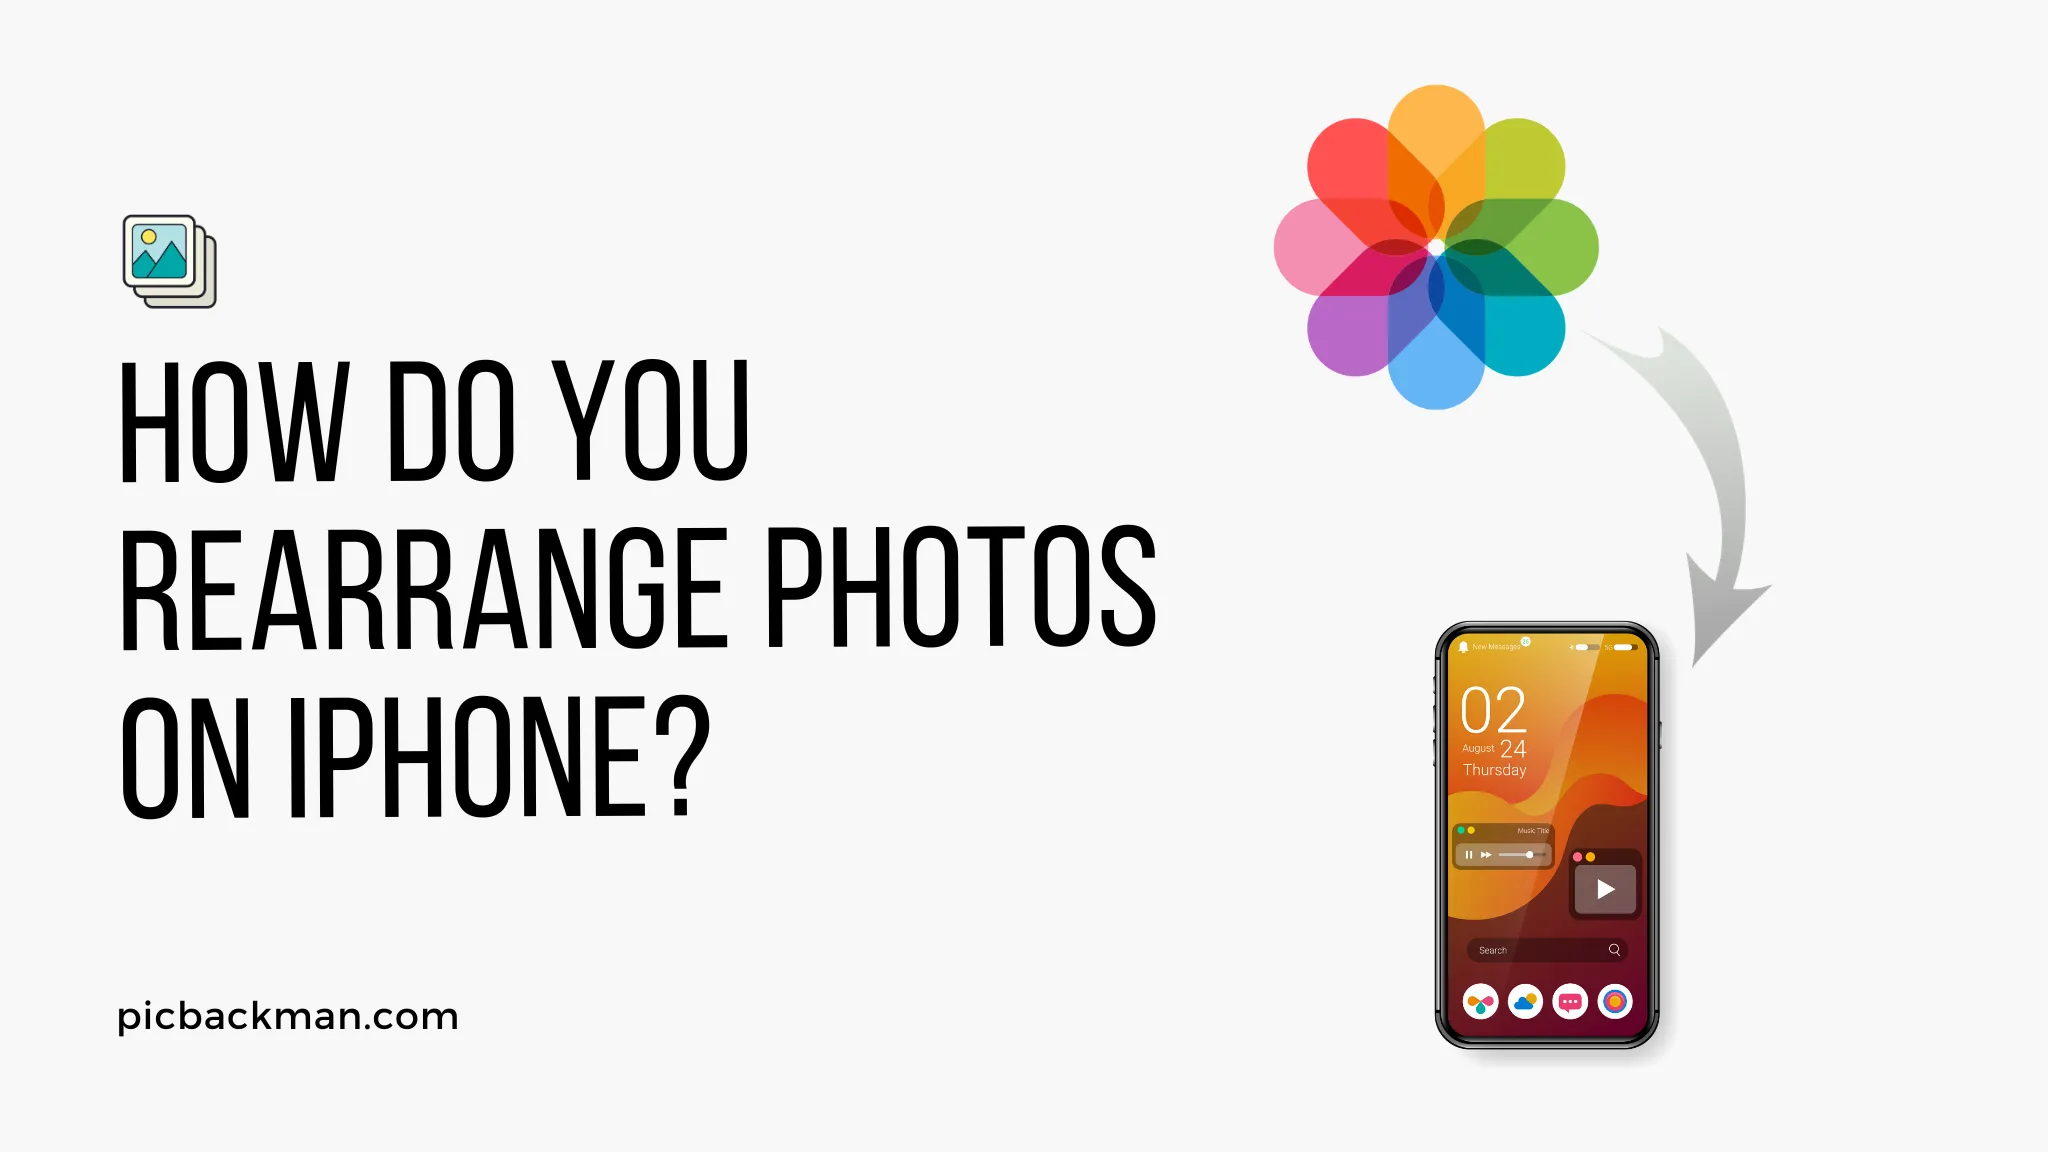 How do you rearrange photos on iPhone?